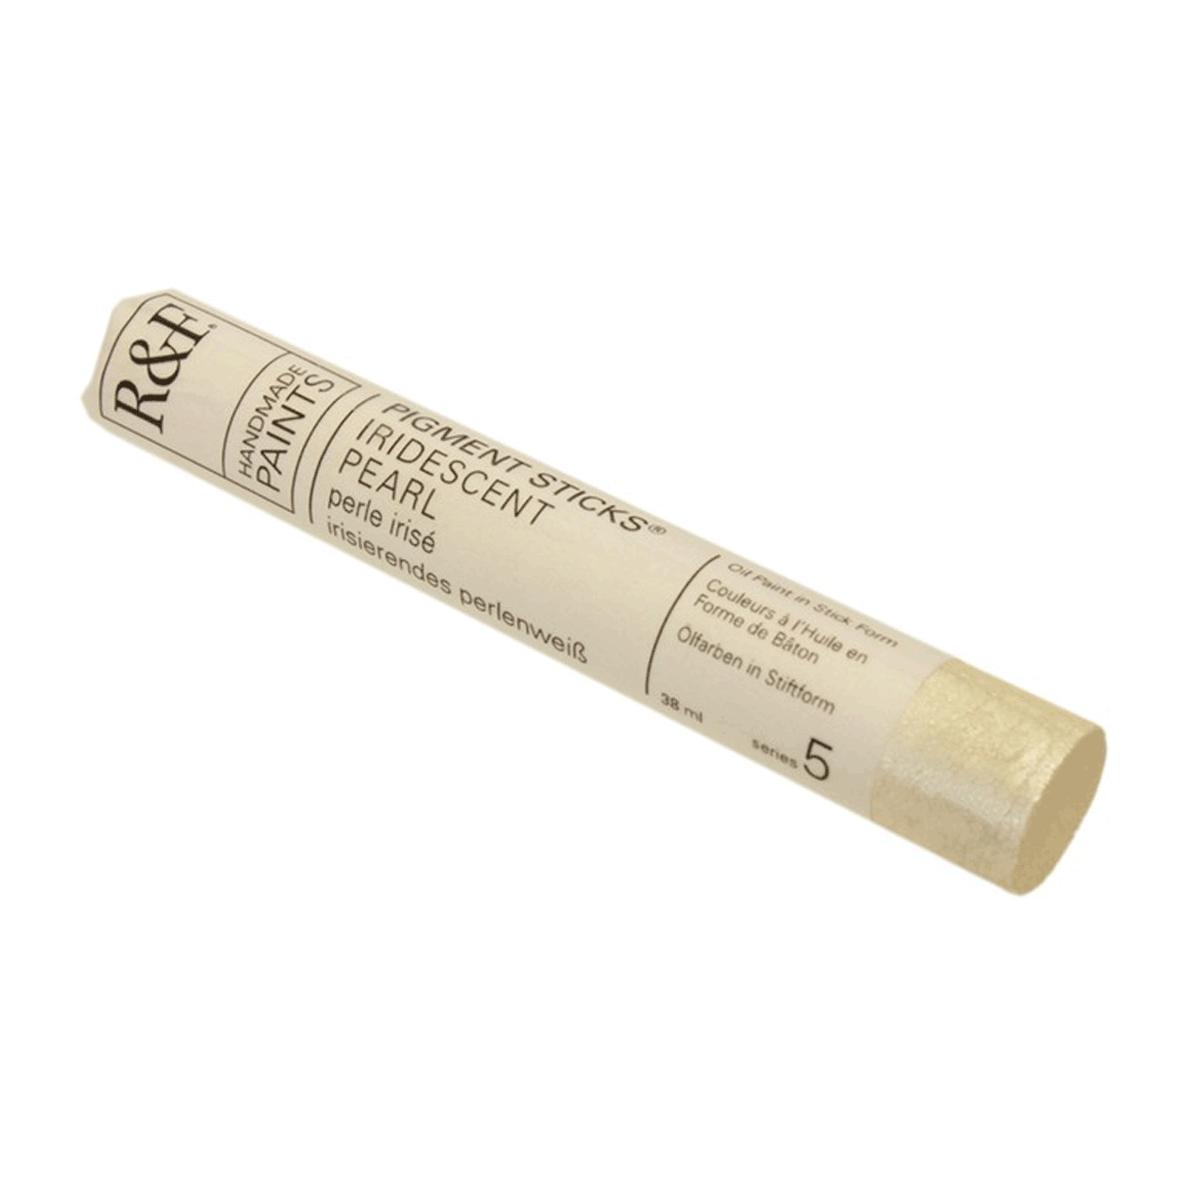 R&F Oil Pigment Stick, Iridescent Pearl 38ml (1.3oz)